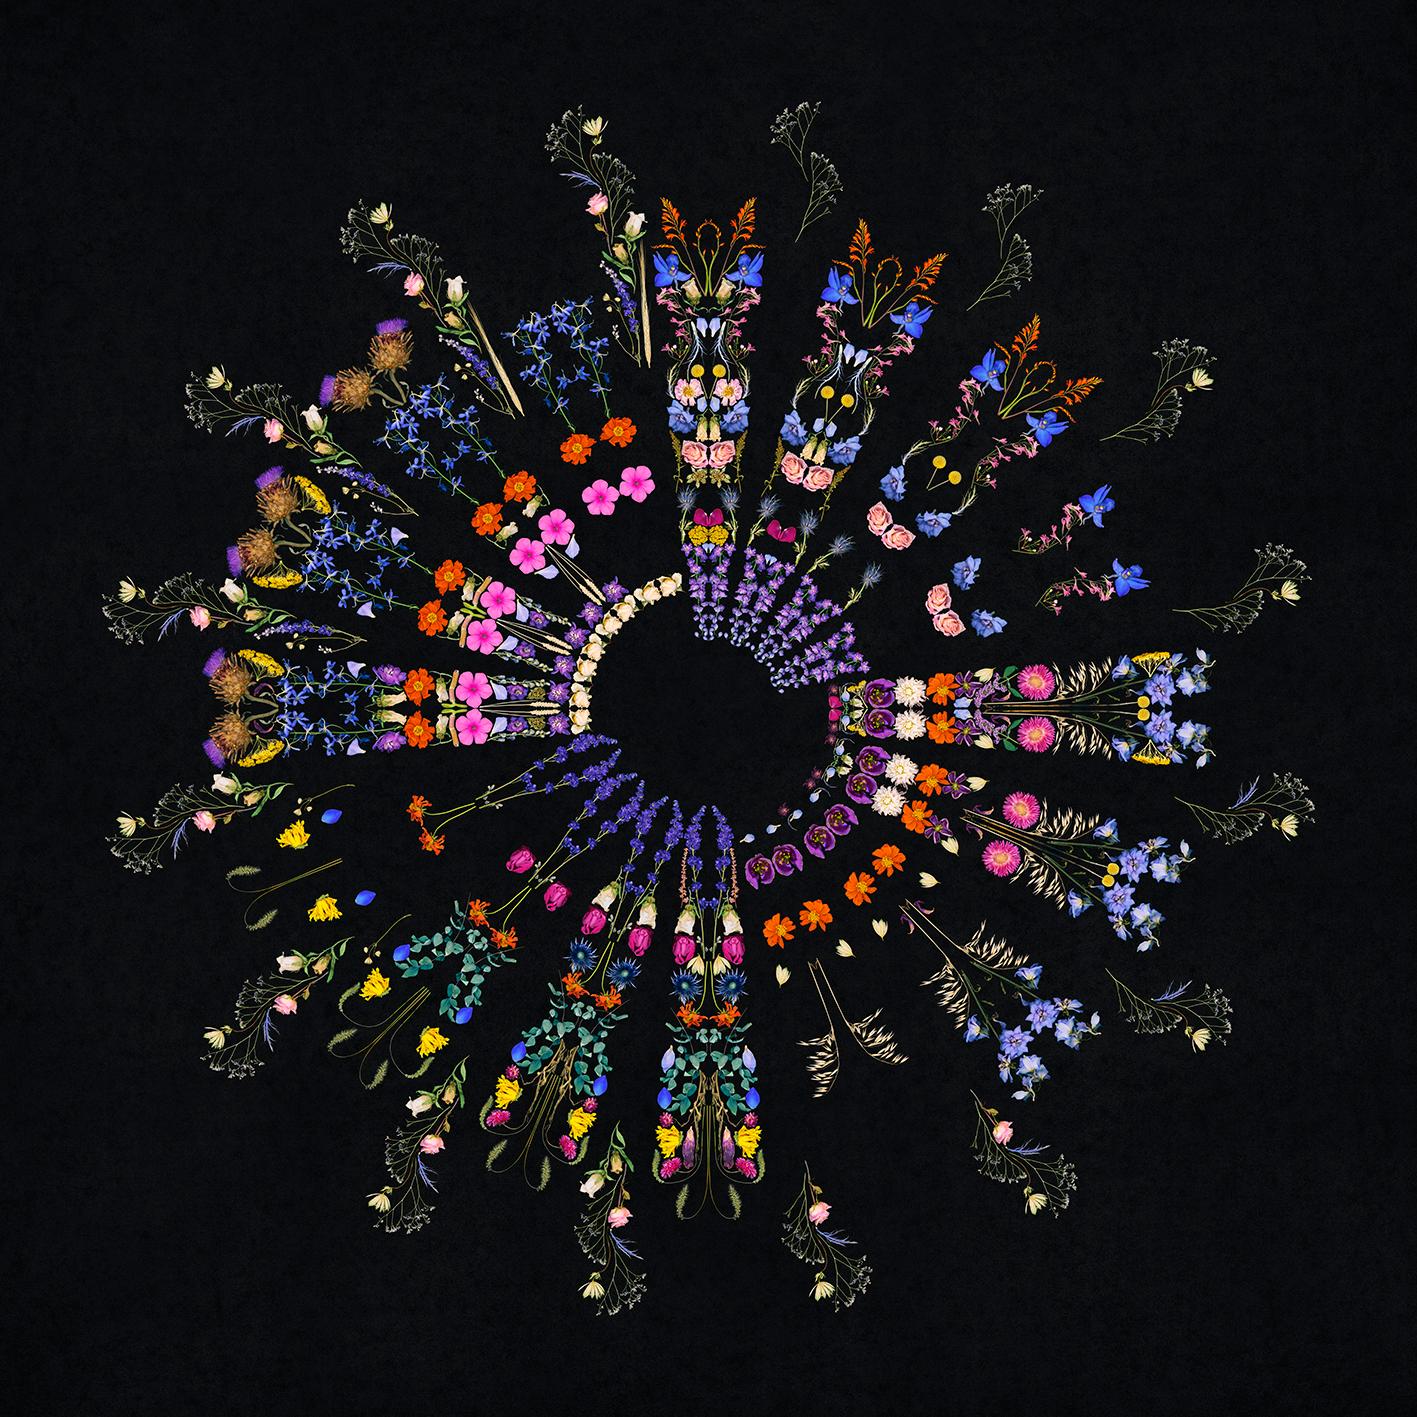 George McLeod Color Photograph - Florist, Mandala - collage of dead flowers